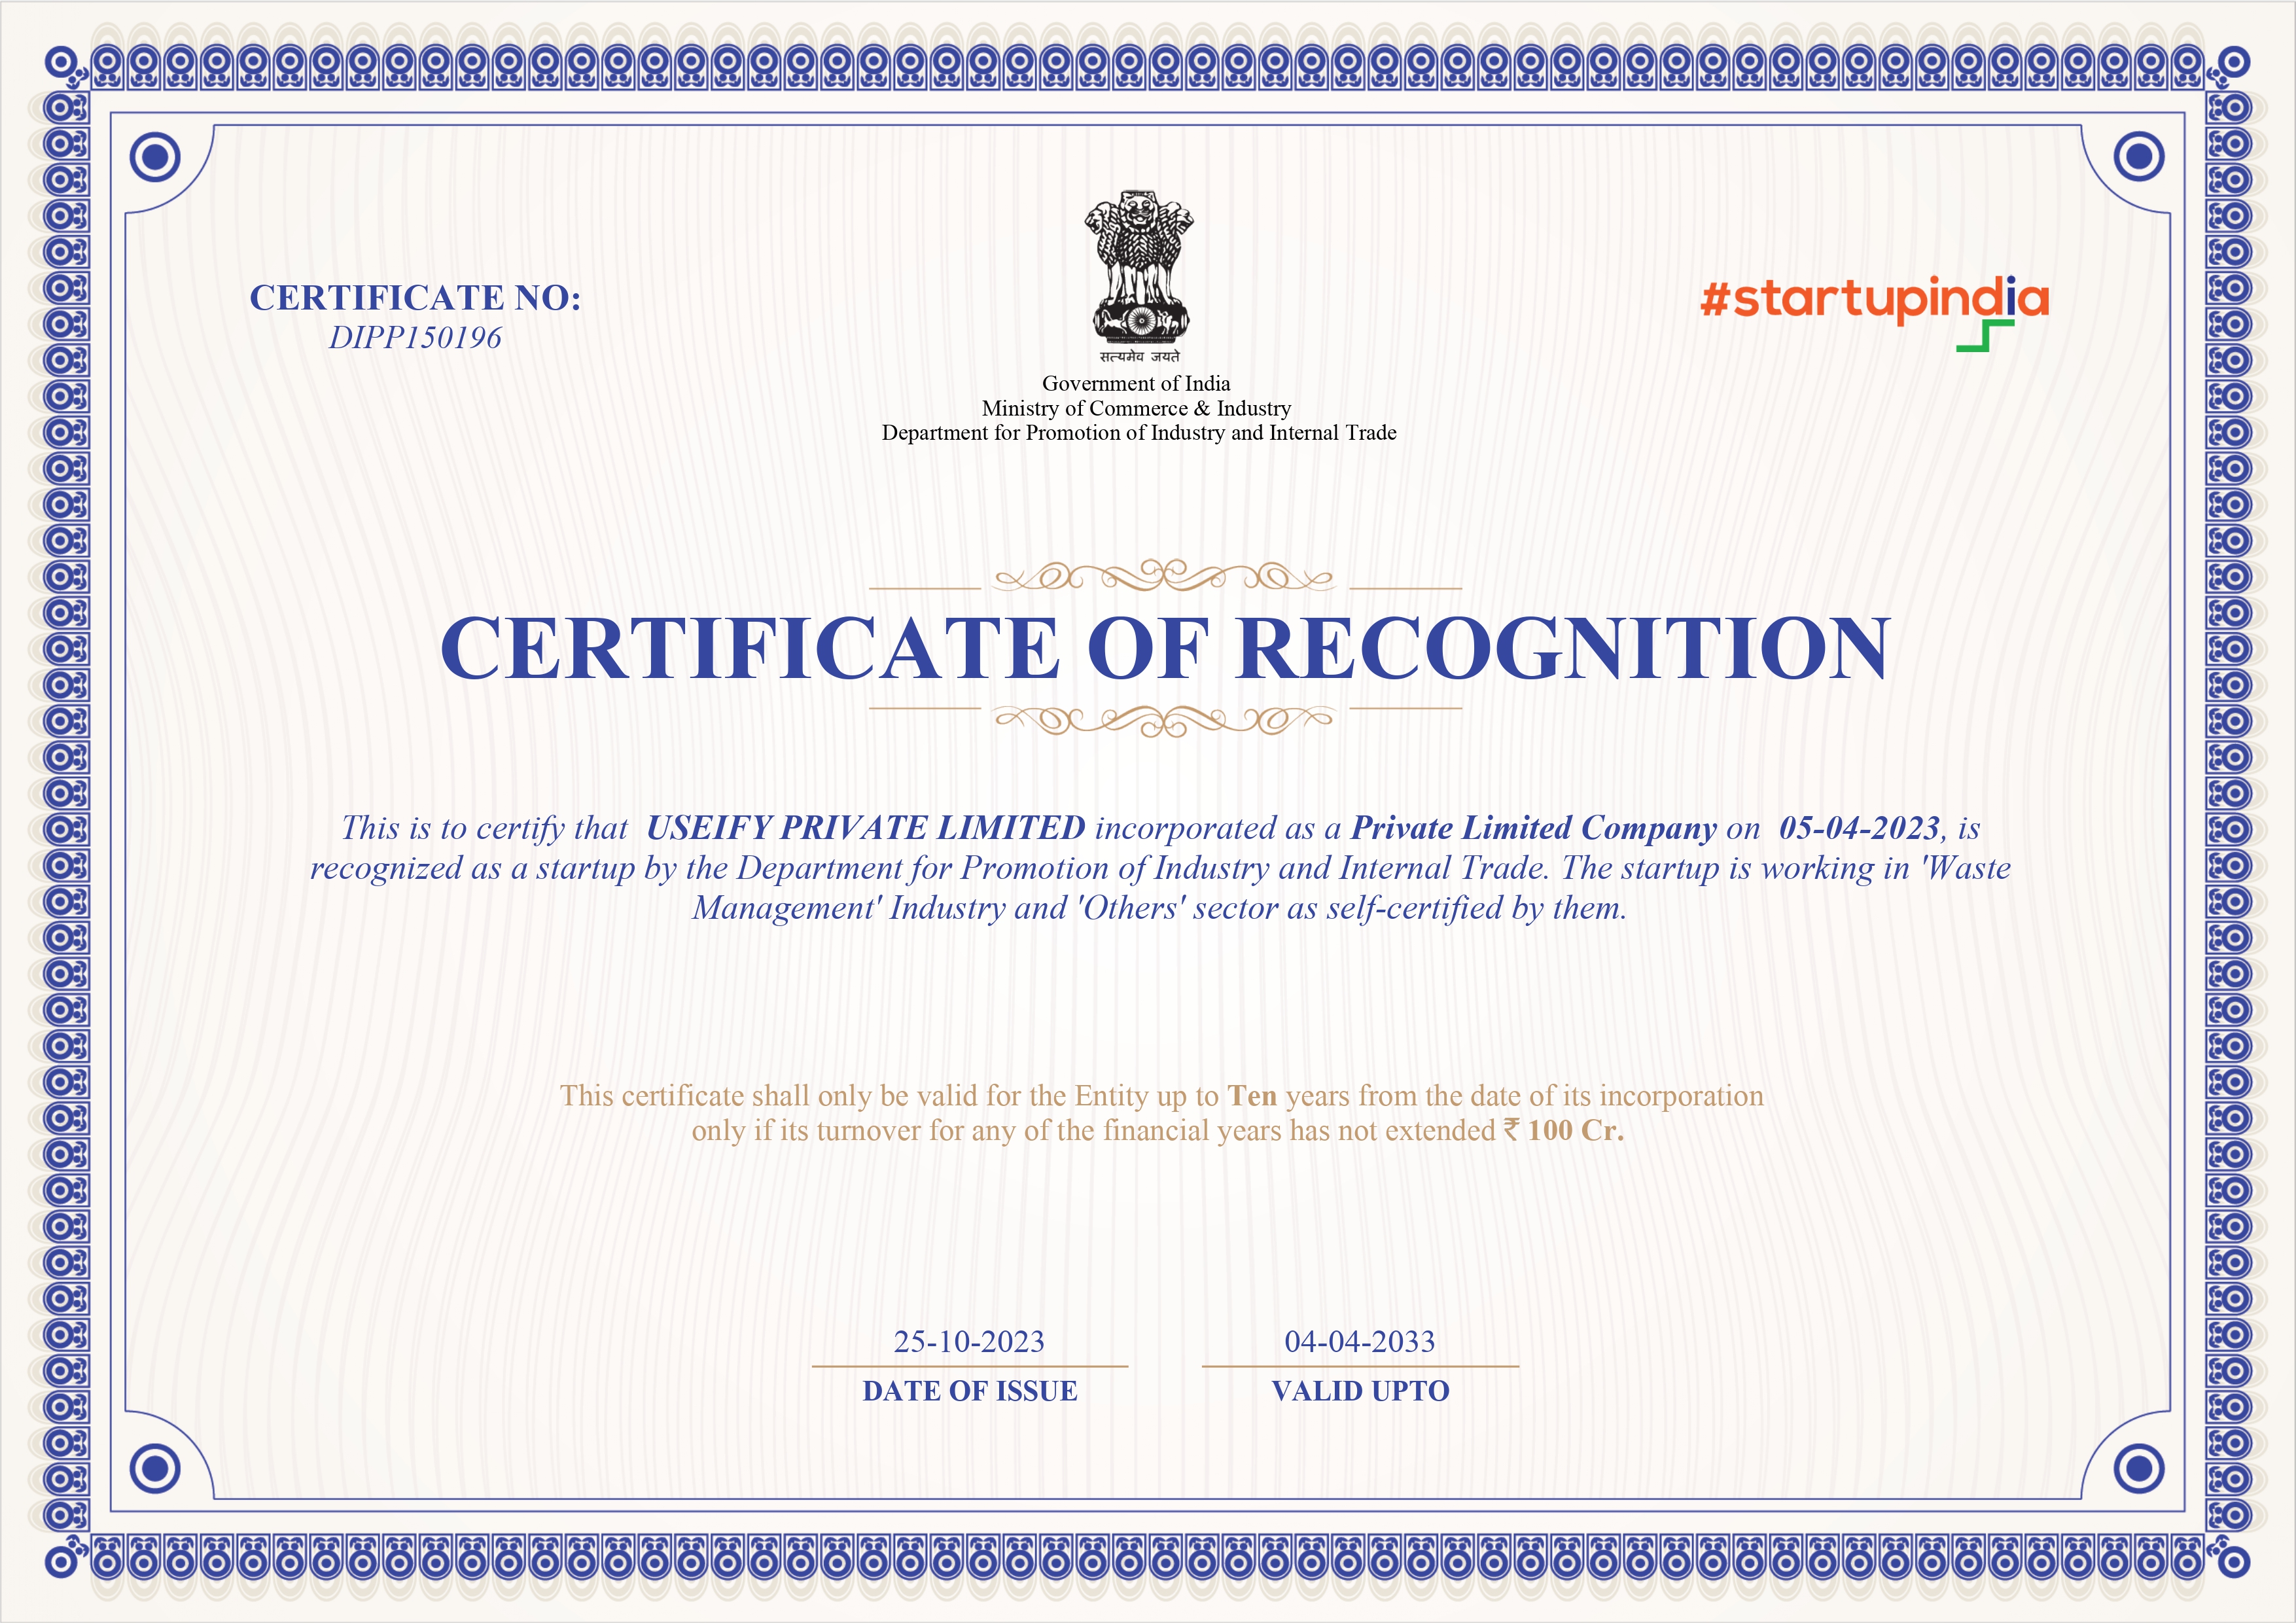 Startup India Recognized Useify